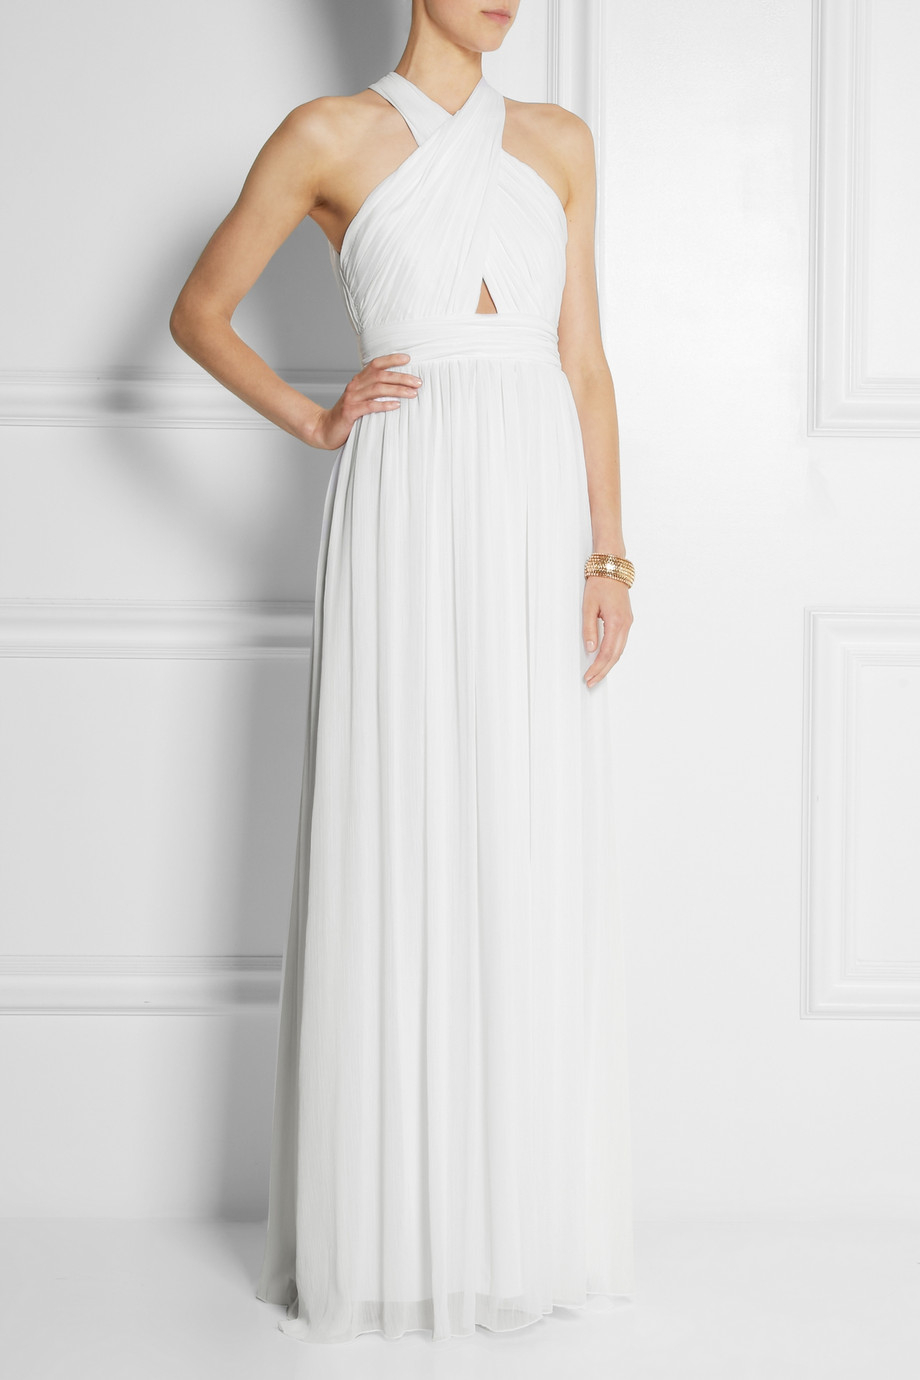 Alice + Olivia Jaelyn Cutout Chiffon Maxi Dress in White - Lyst